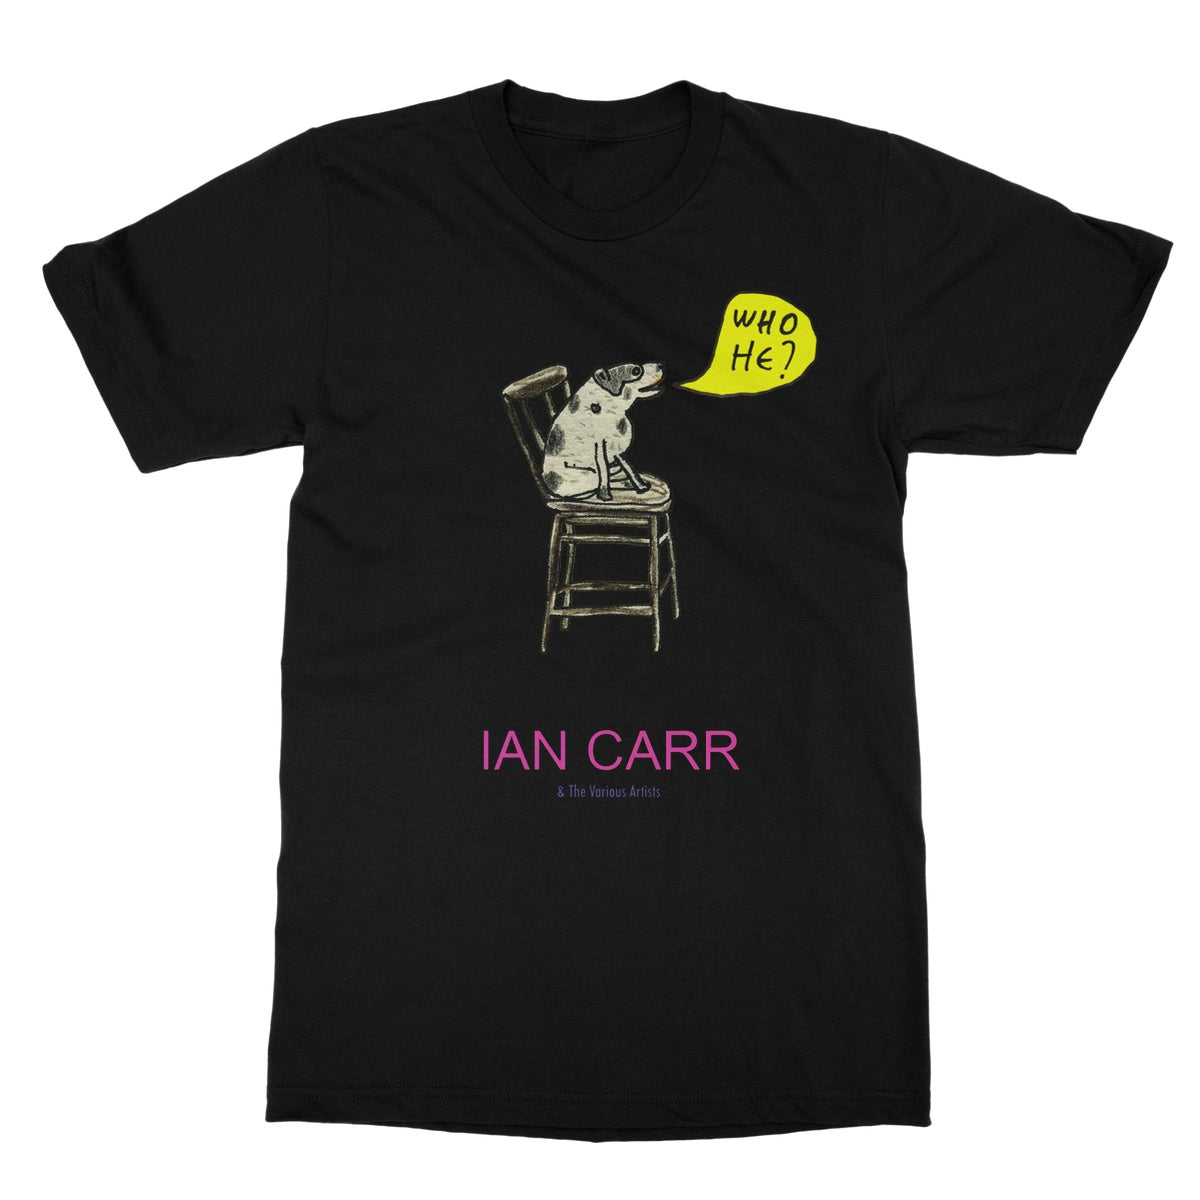 Ian Carr - Who He? T-Shirt